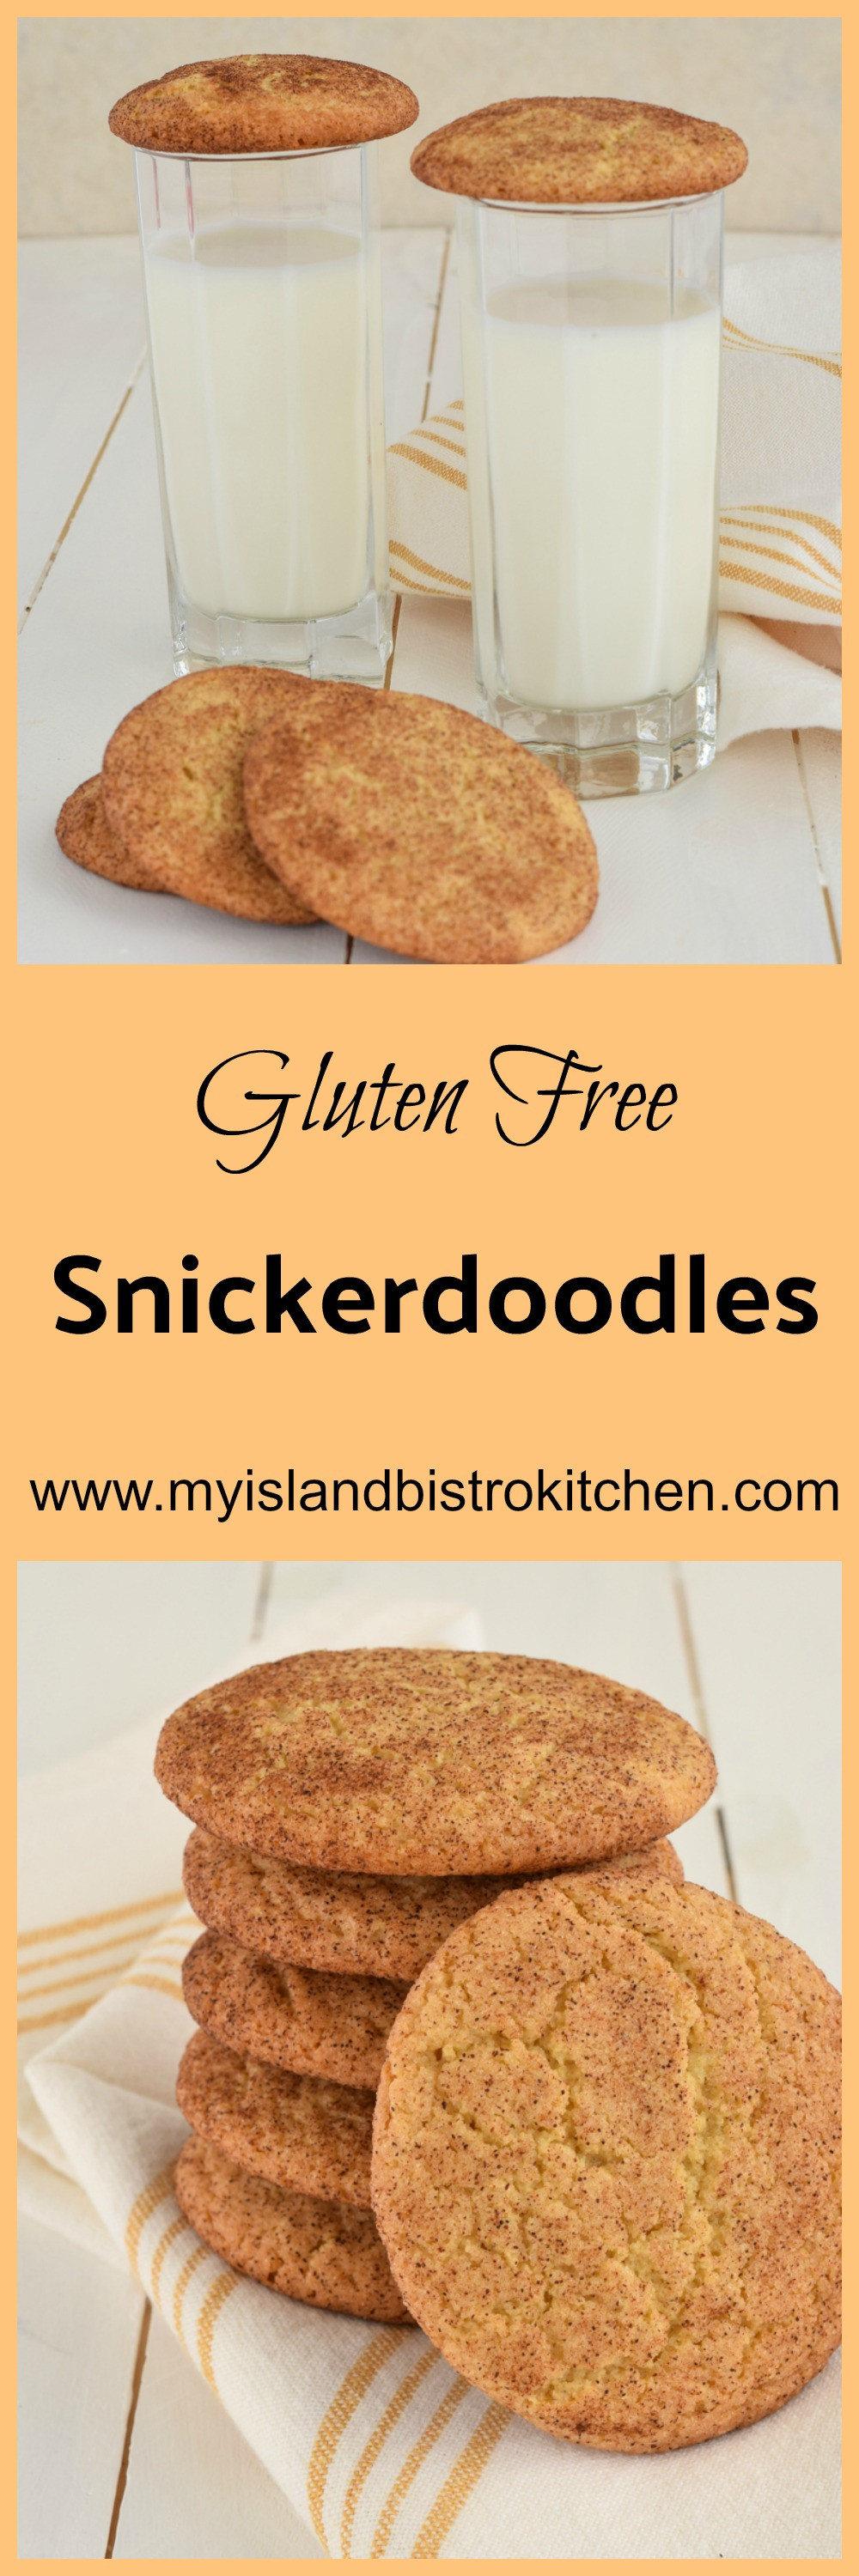 Dairy Free Snickerdoodles
 Gluten Free Snickerdoodle Cookie Recipe My Island Bistro